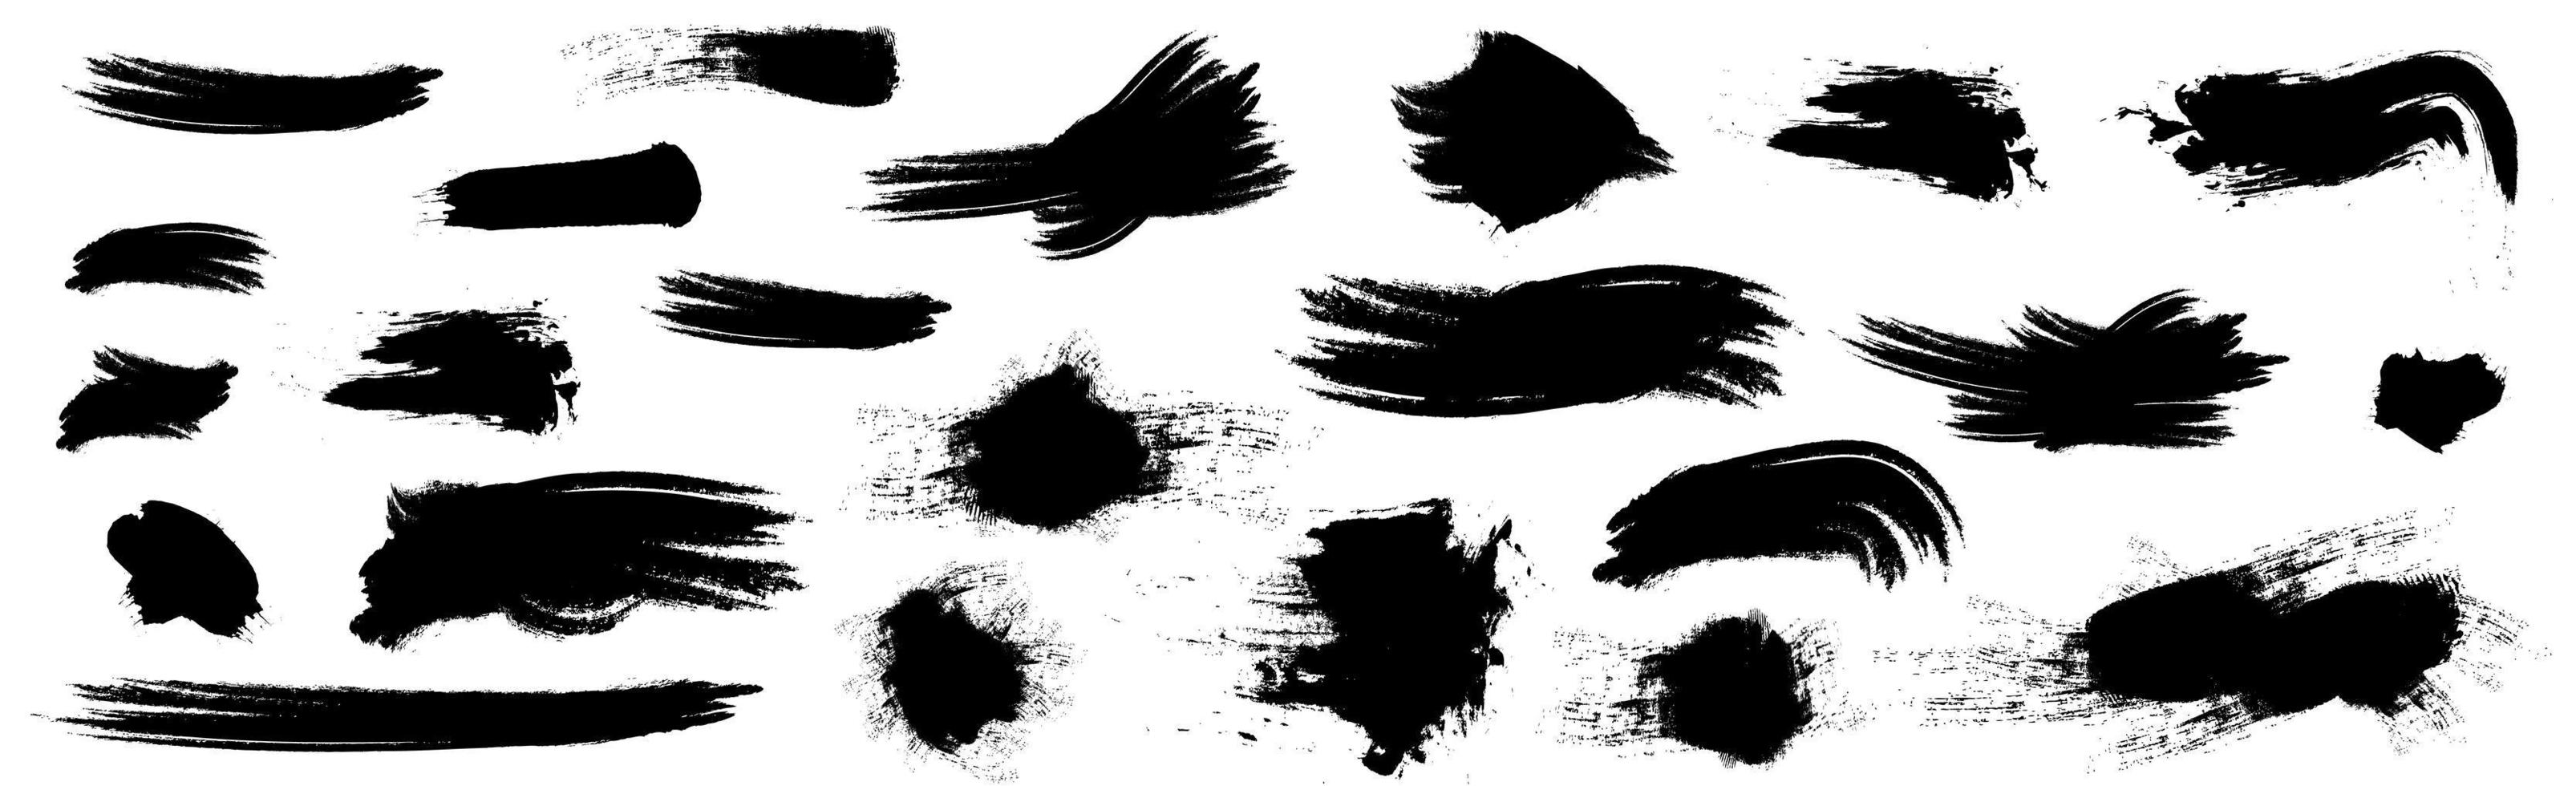 Diferentes trazos de pintura negra sobre un fondo blanco - vector